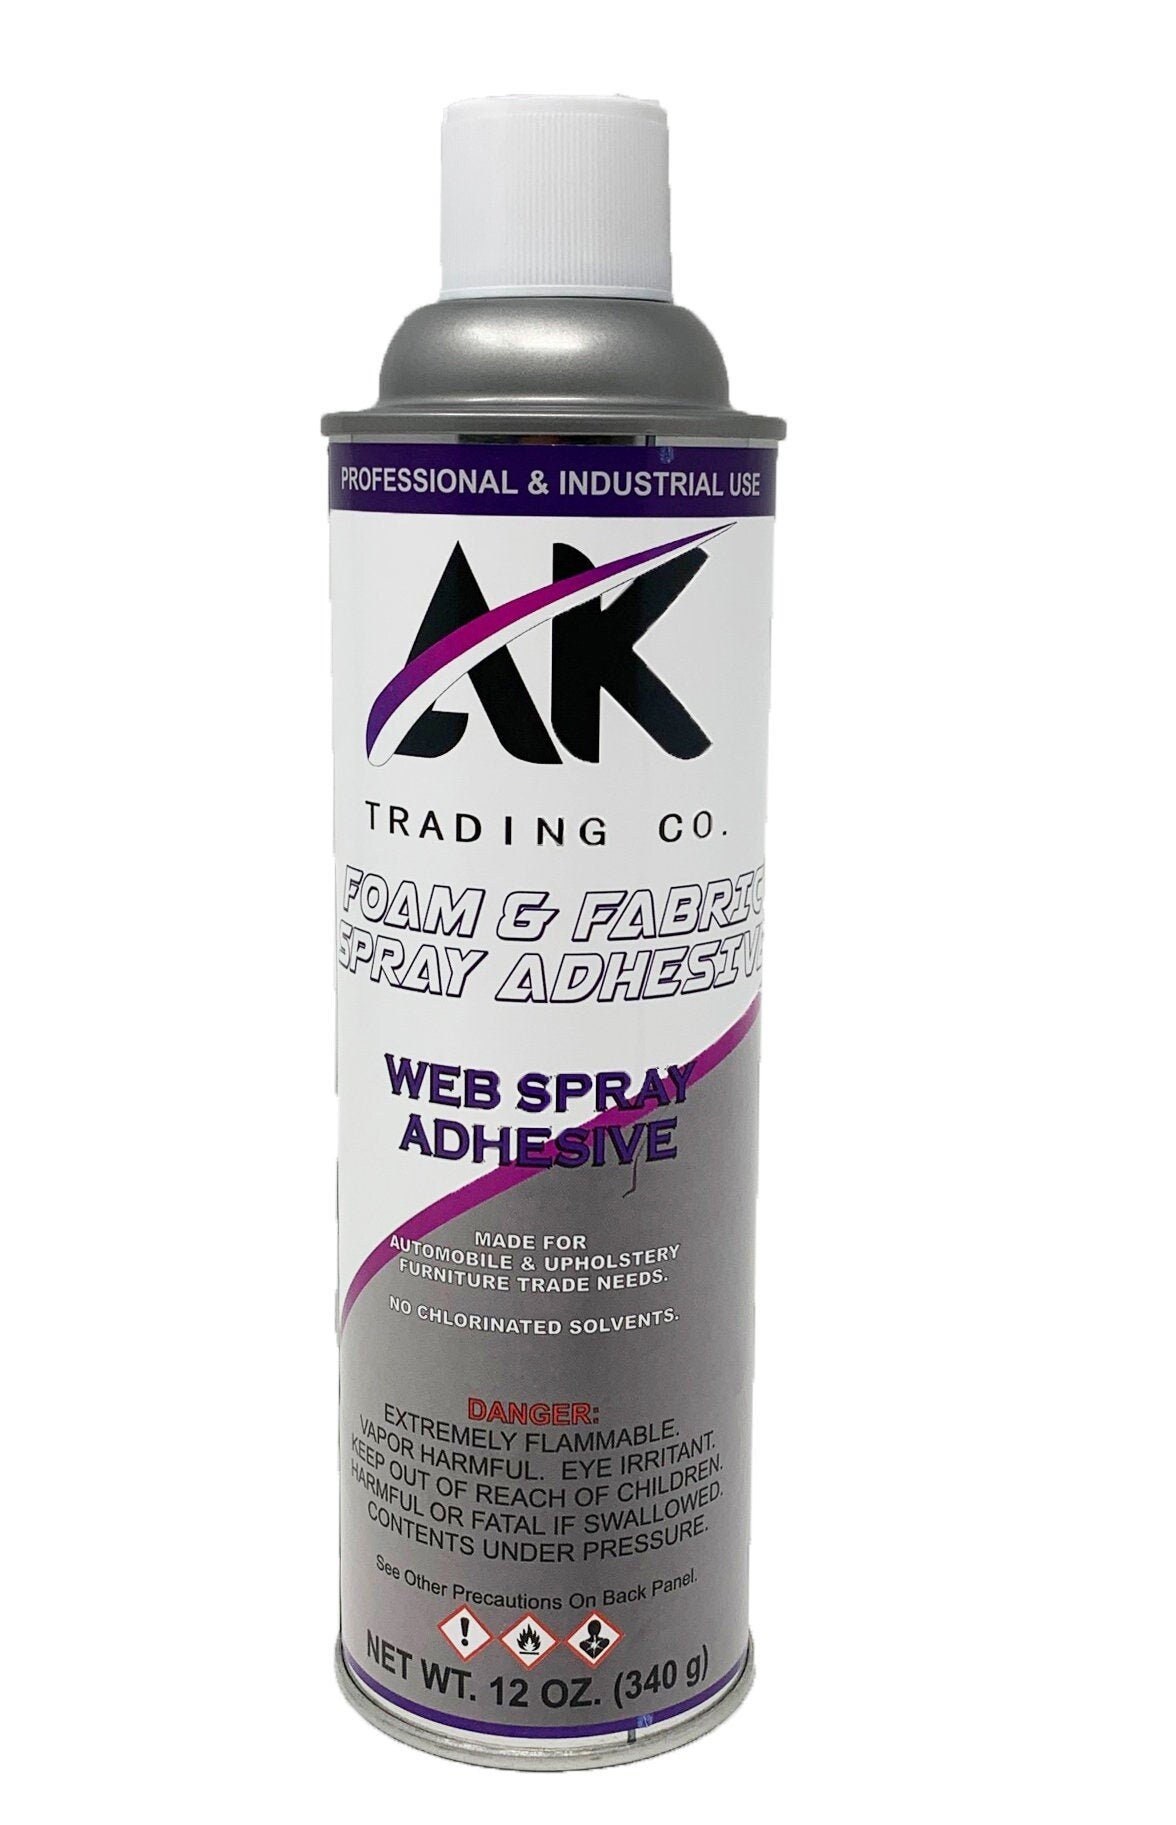 Foam & Fabric Spray Glue X133 Adhesive 12 Oz California VOC Compliant 